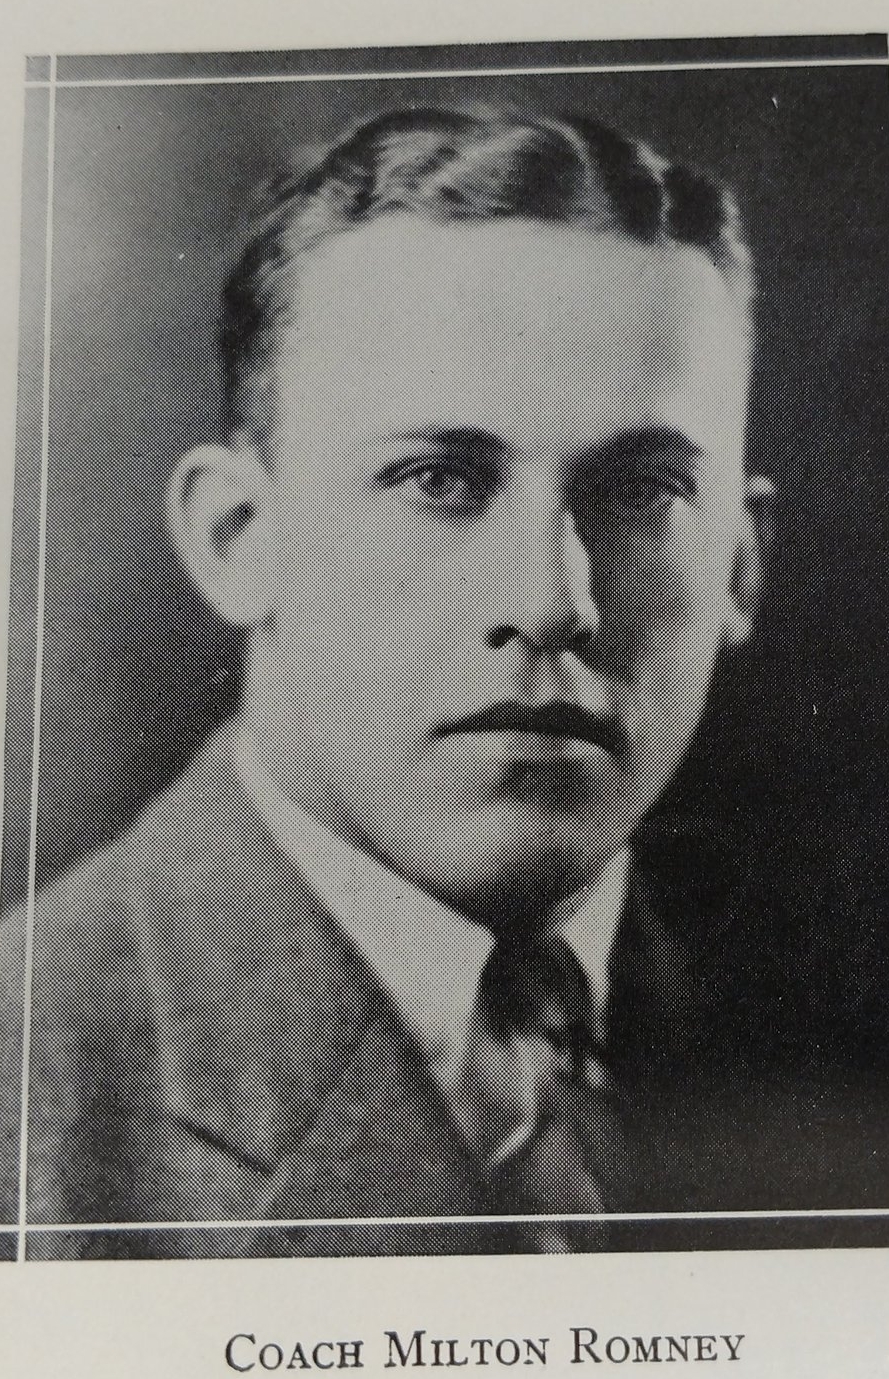 Coach Romney 1923.jpg